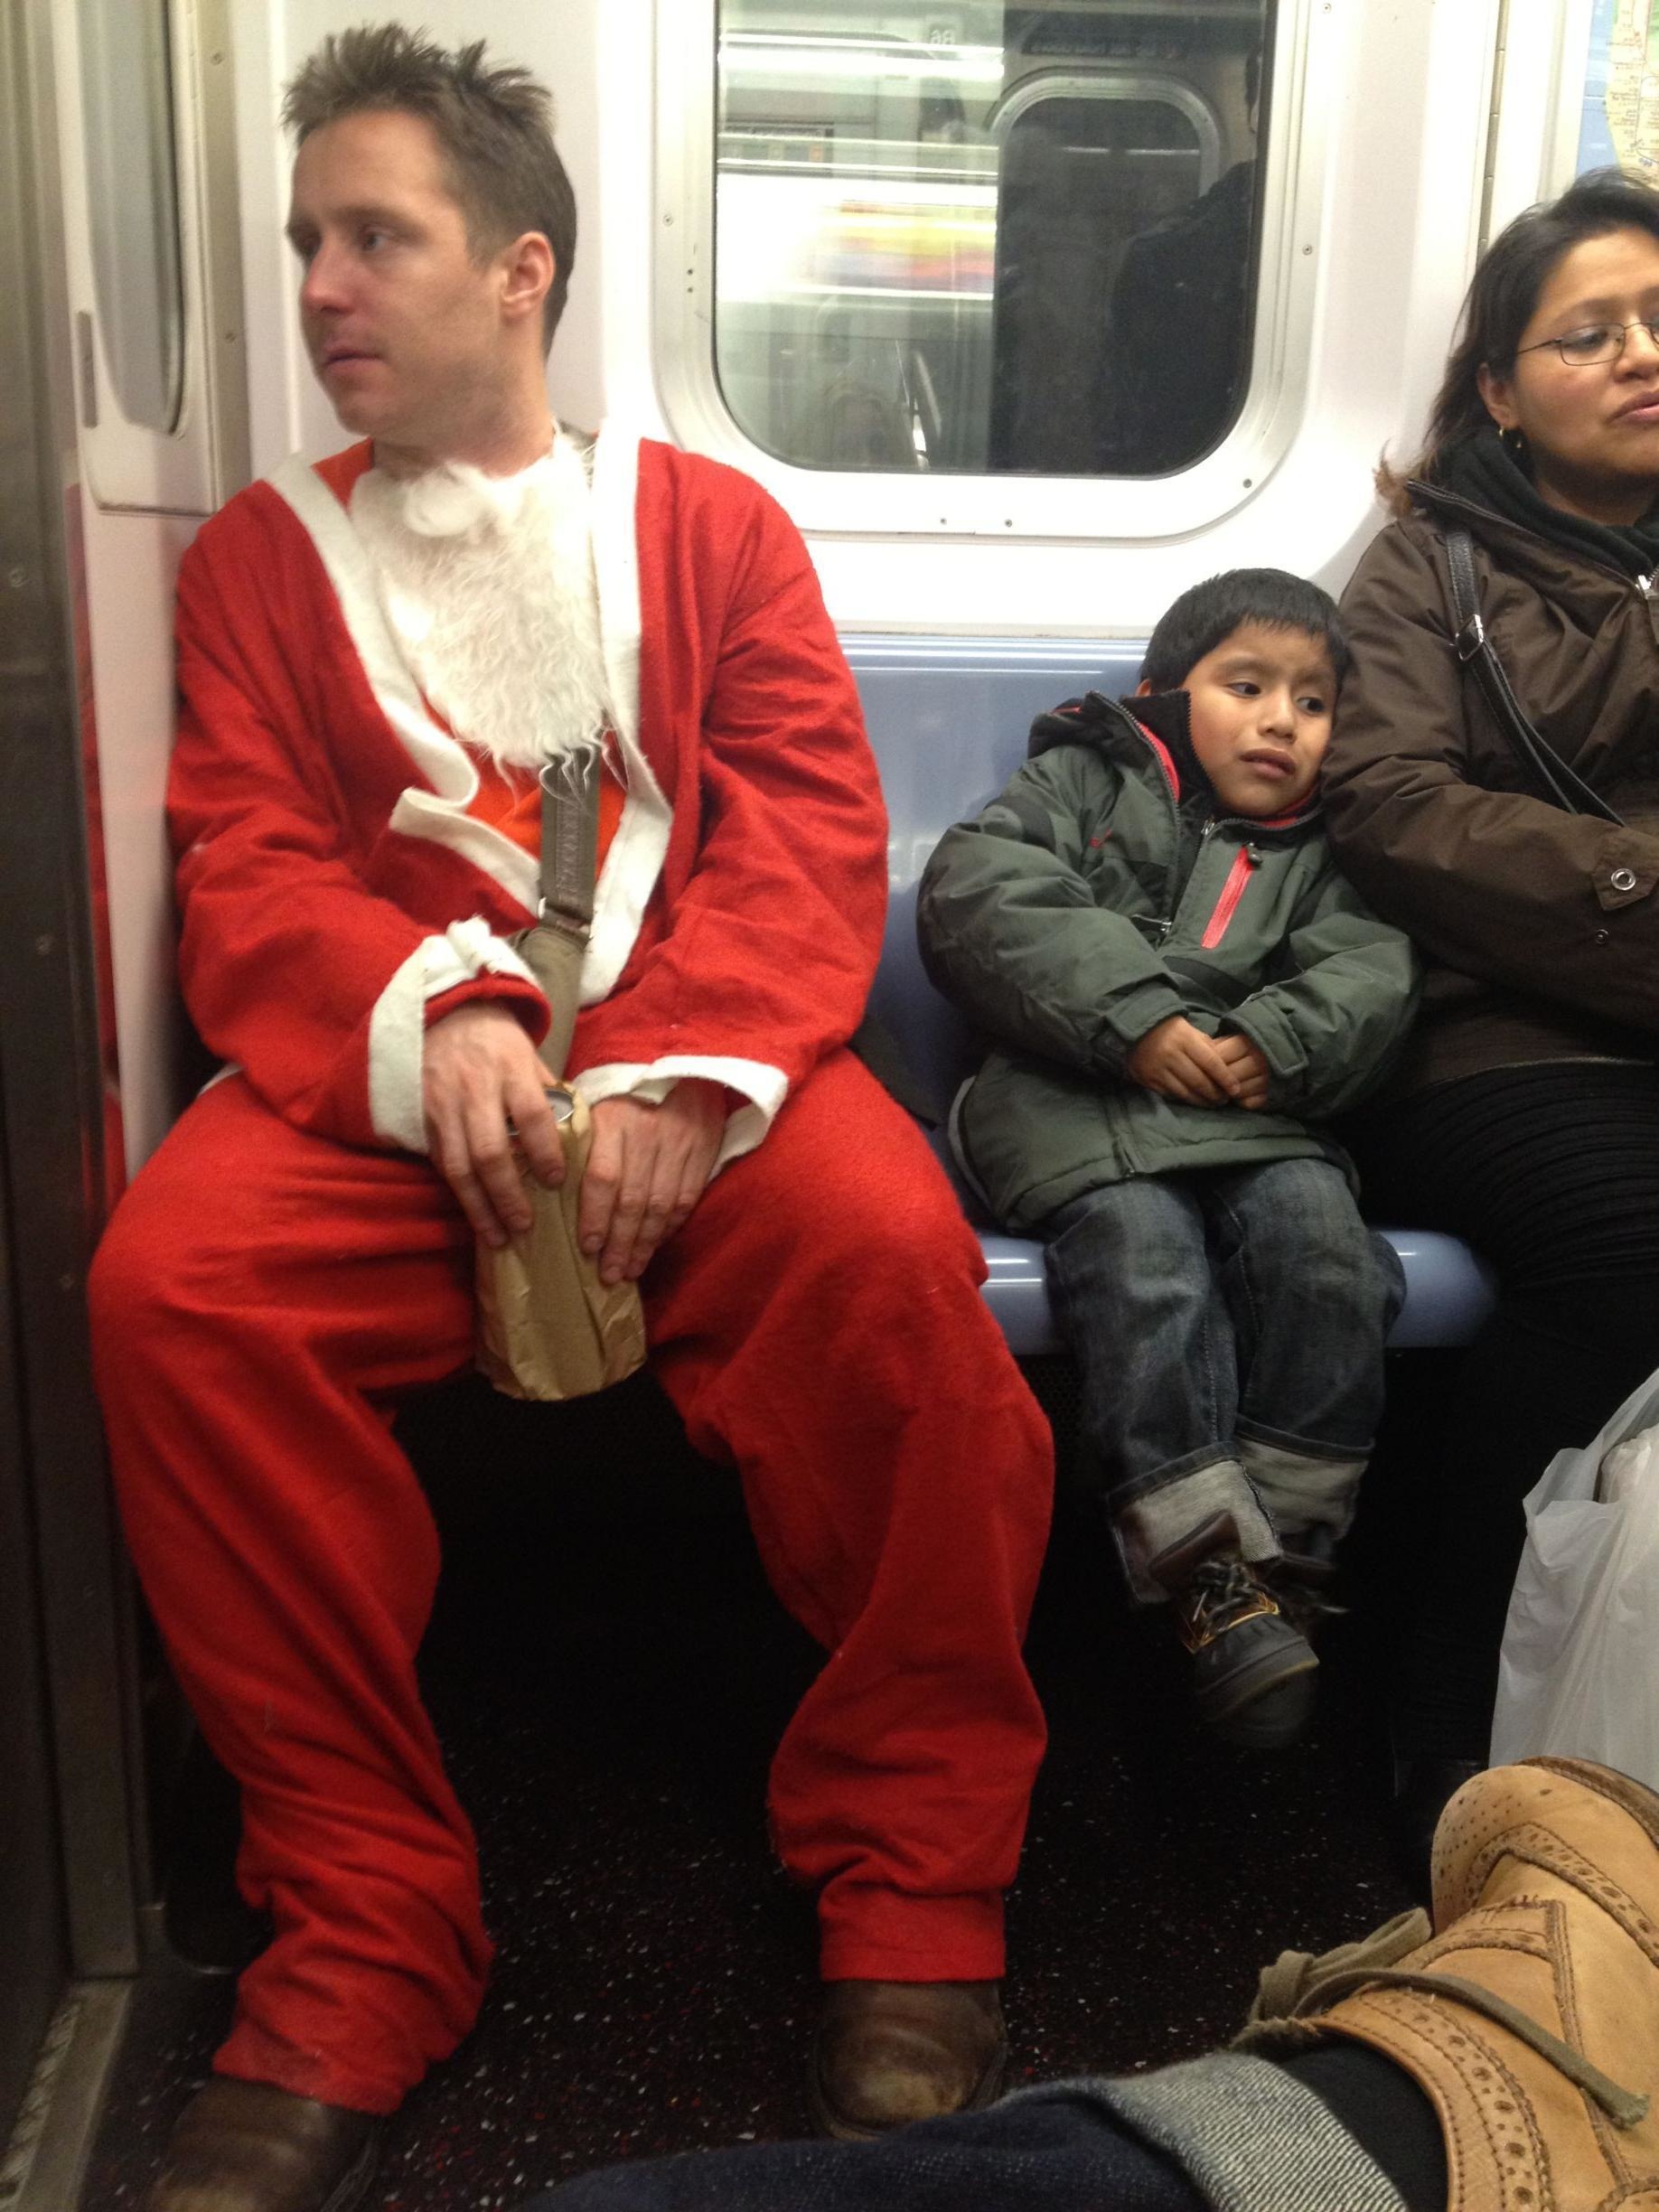 When drunk Santa scares the kids.